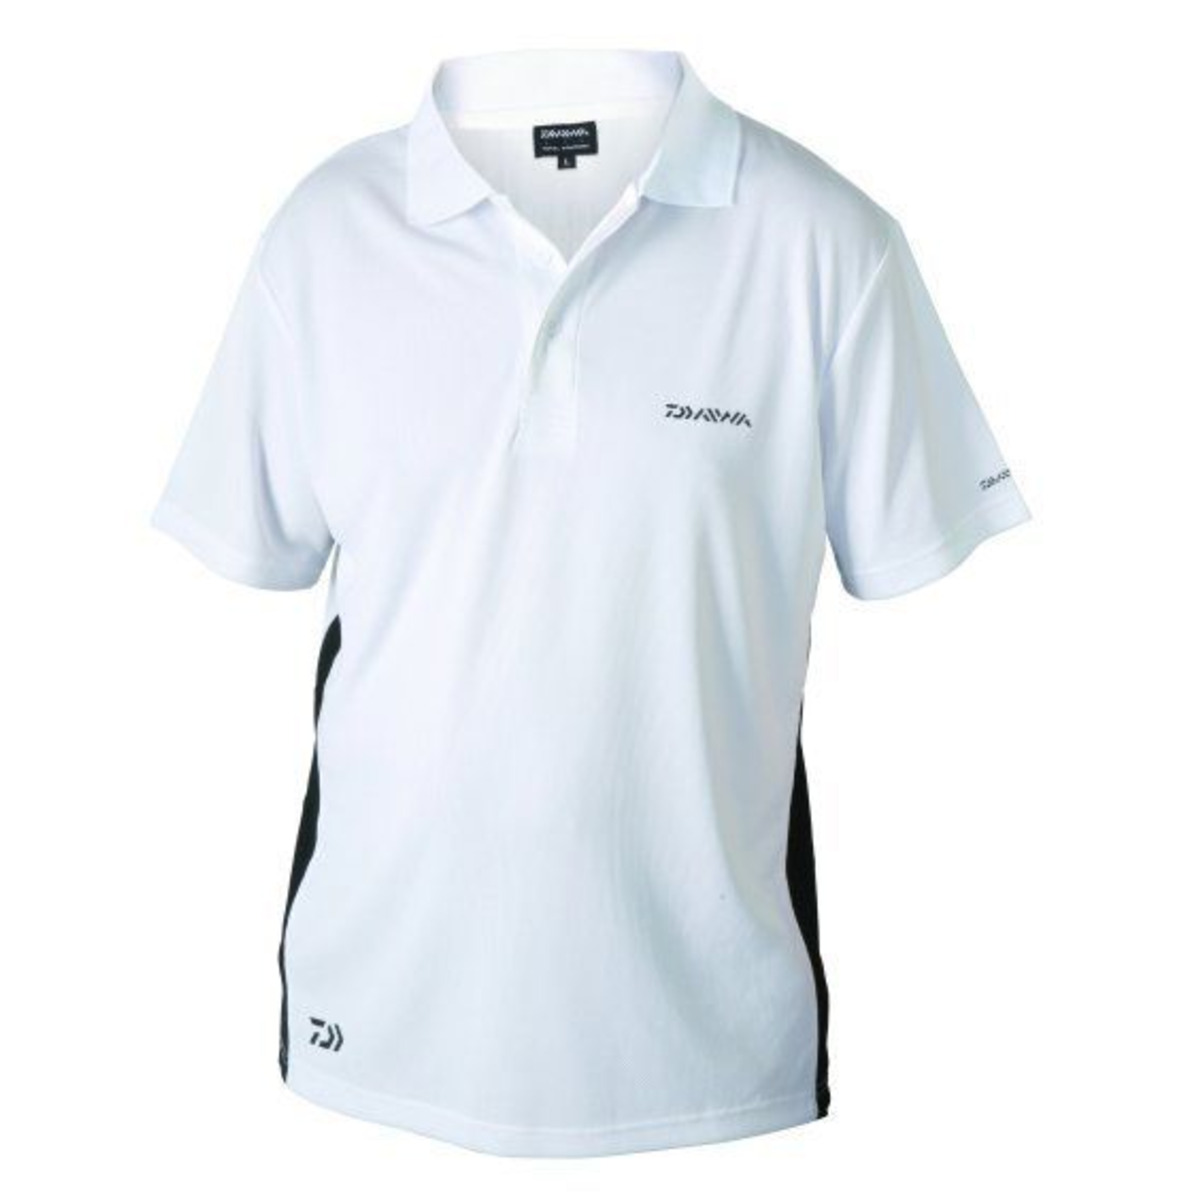 Daiwa Polo Shirt - L - Blanco         